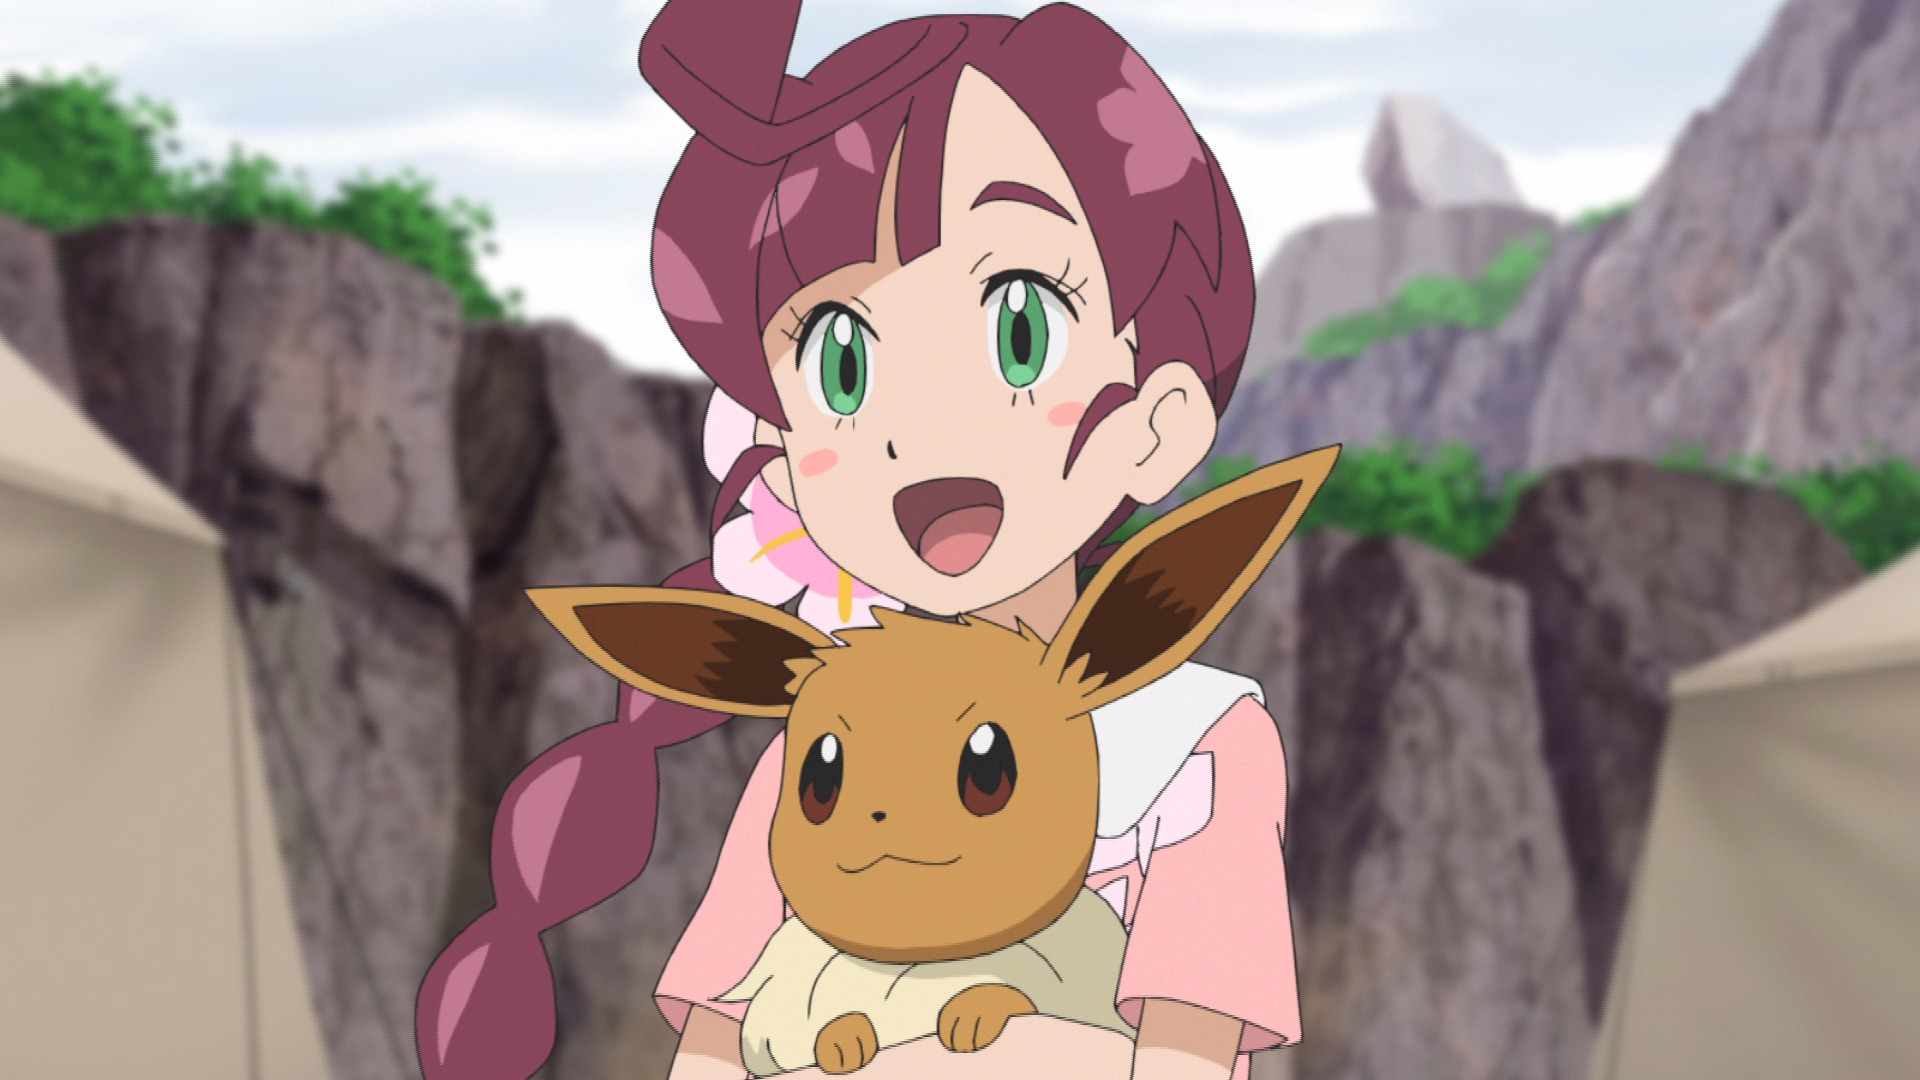 Pokémon Anime Continues on Netflix with Pokémon Master Journeys